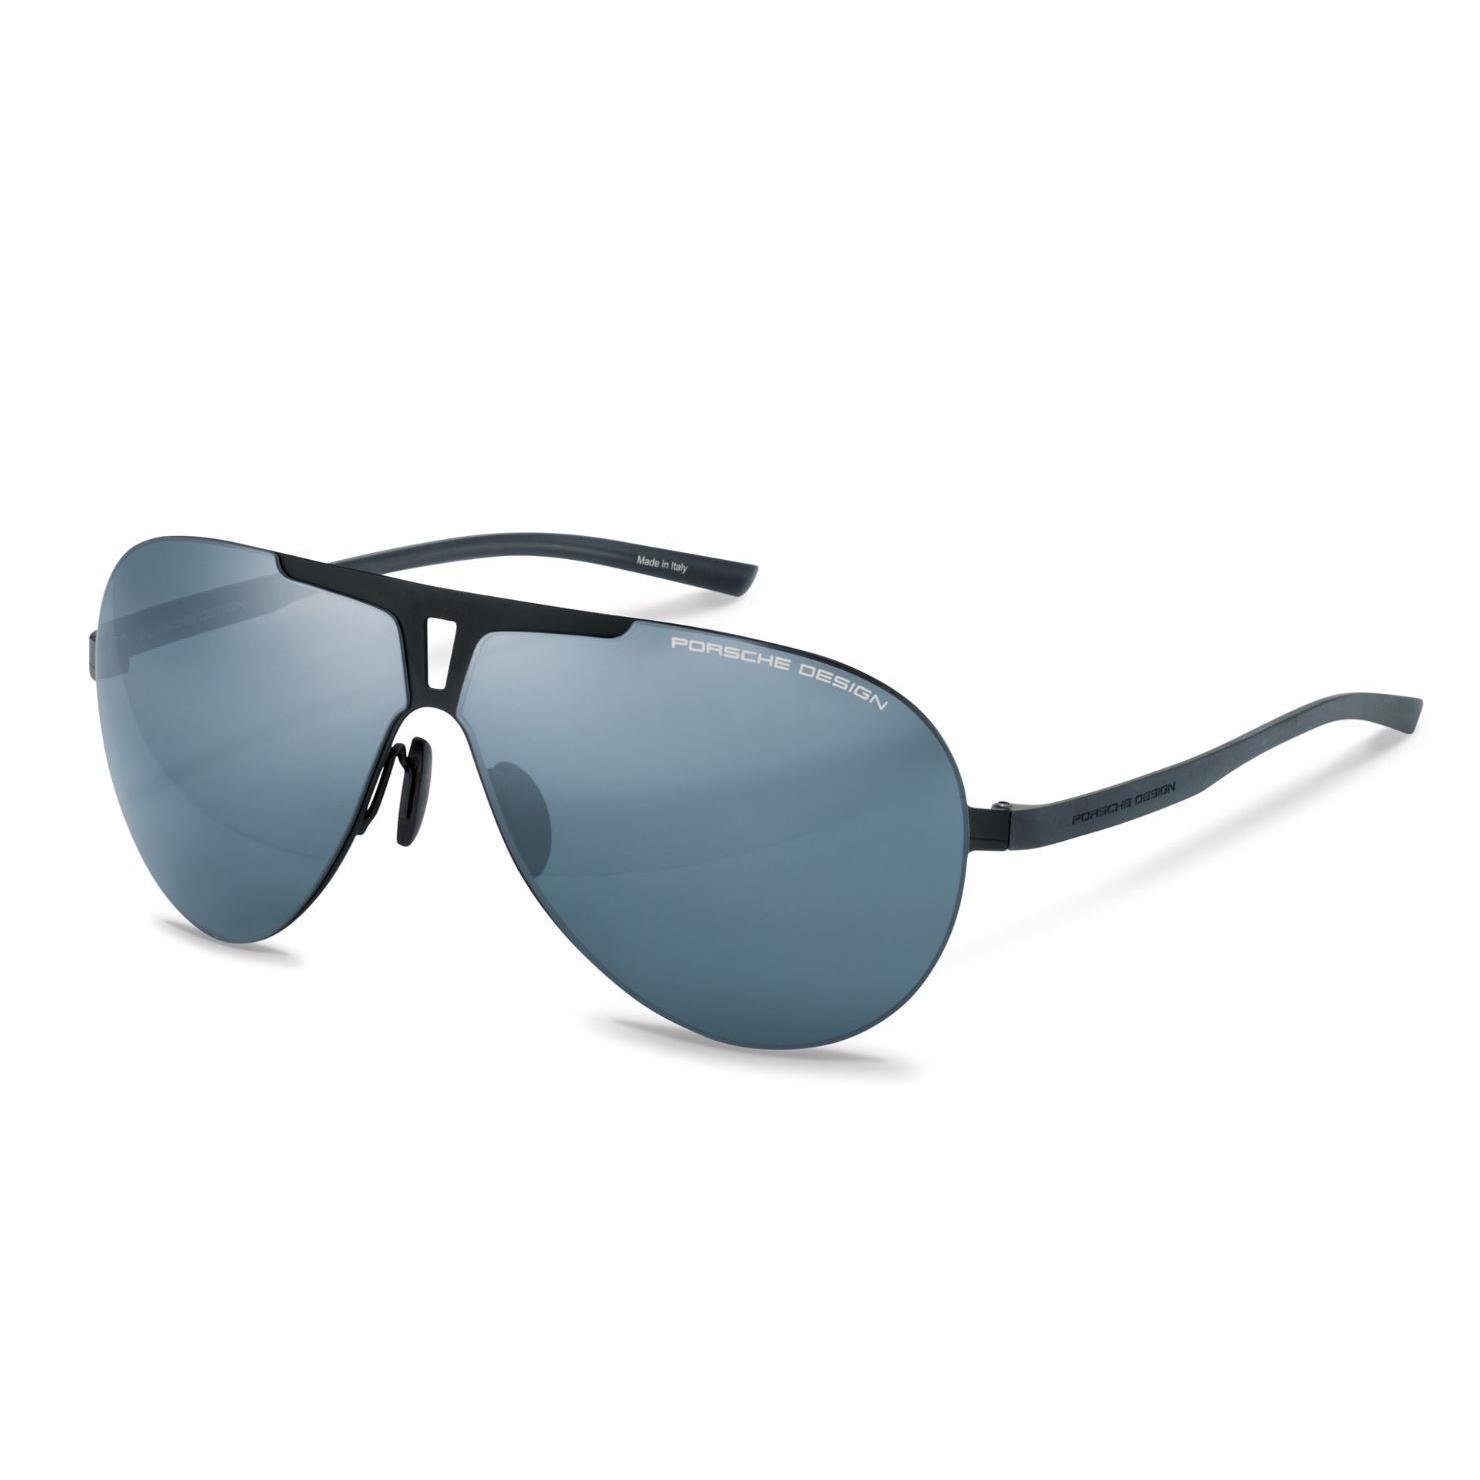 Porsche Design P 8656 A Black Sunglasses